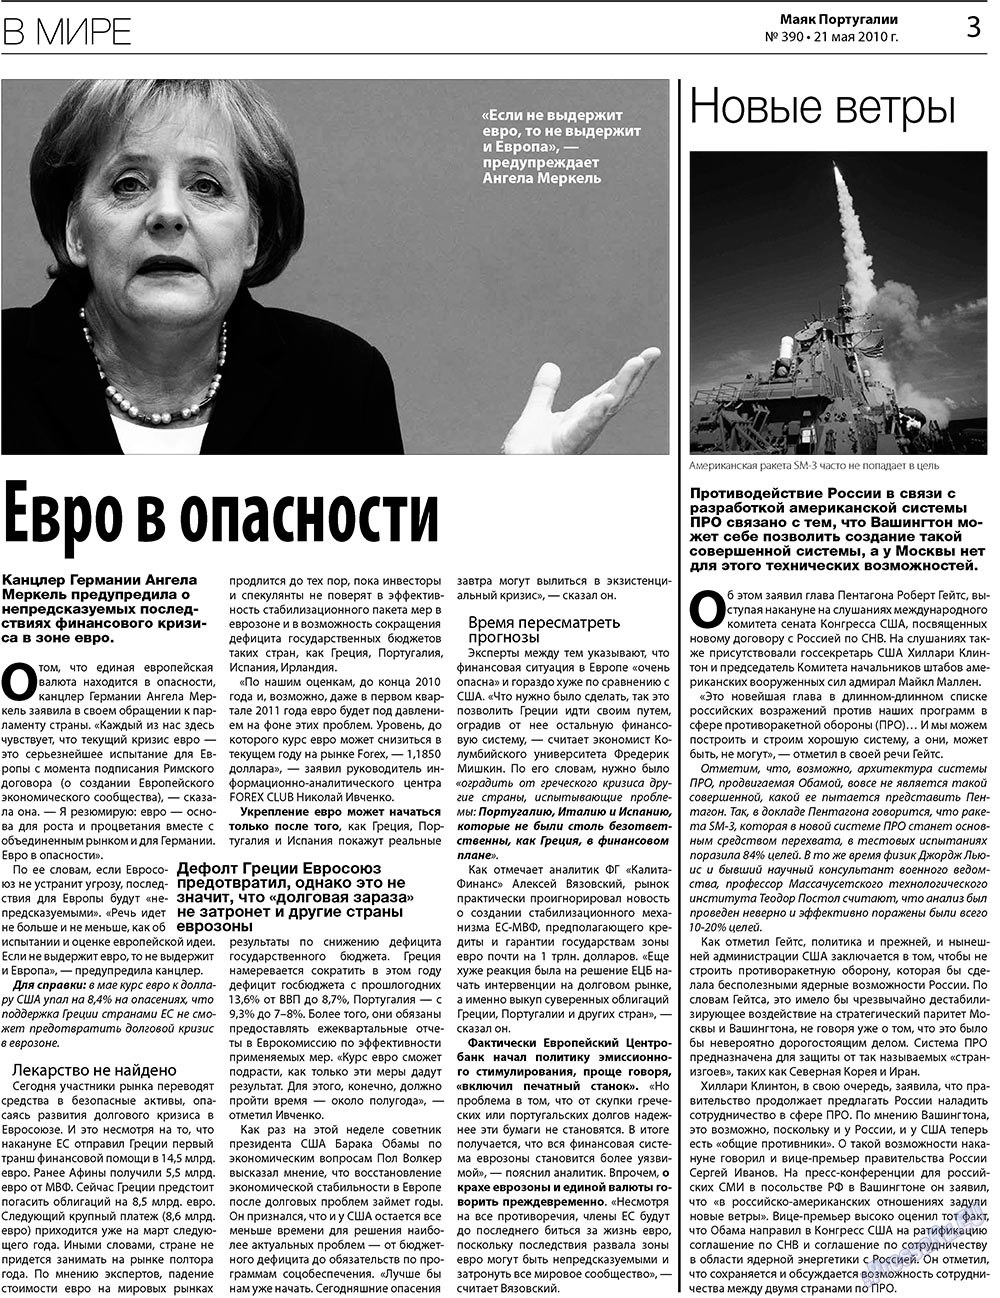 Маяк Португалии, газета. 2010 №390 стр.3